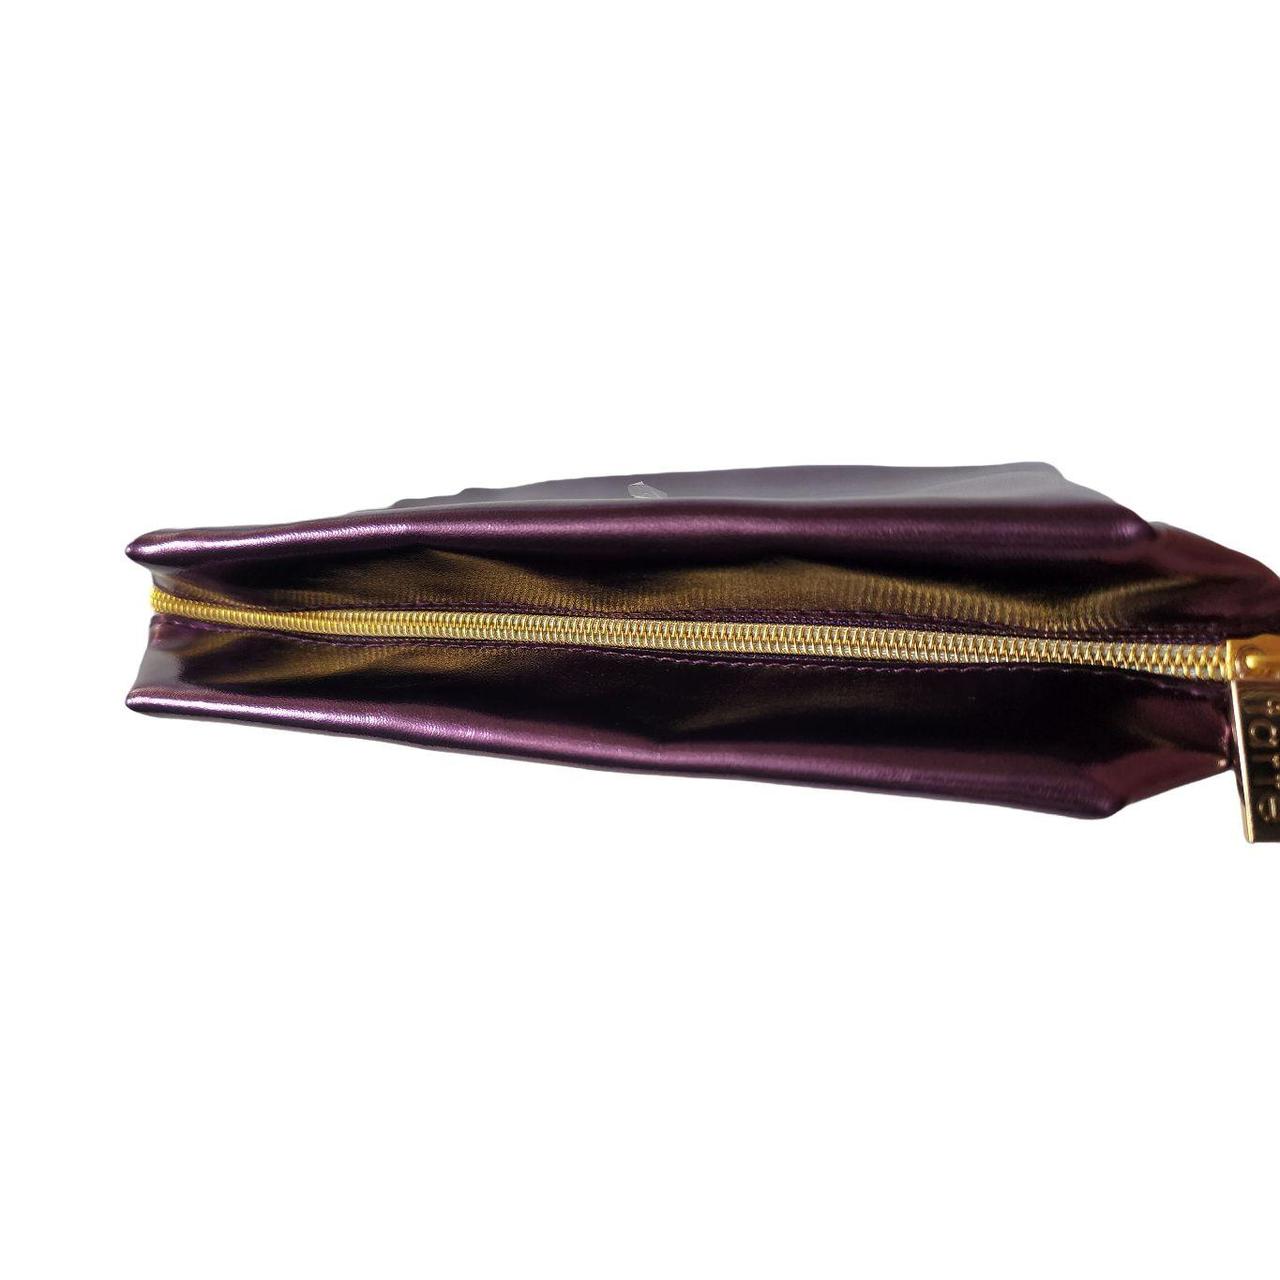 Product Image 3 - •Shiny metallic purple makeup bag